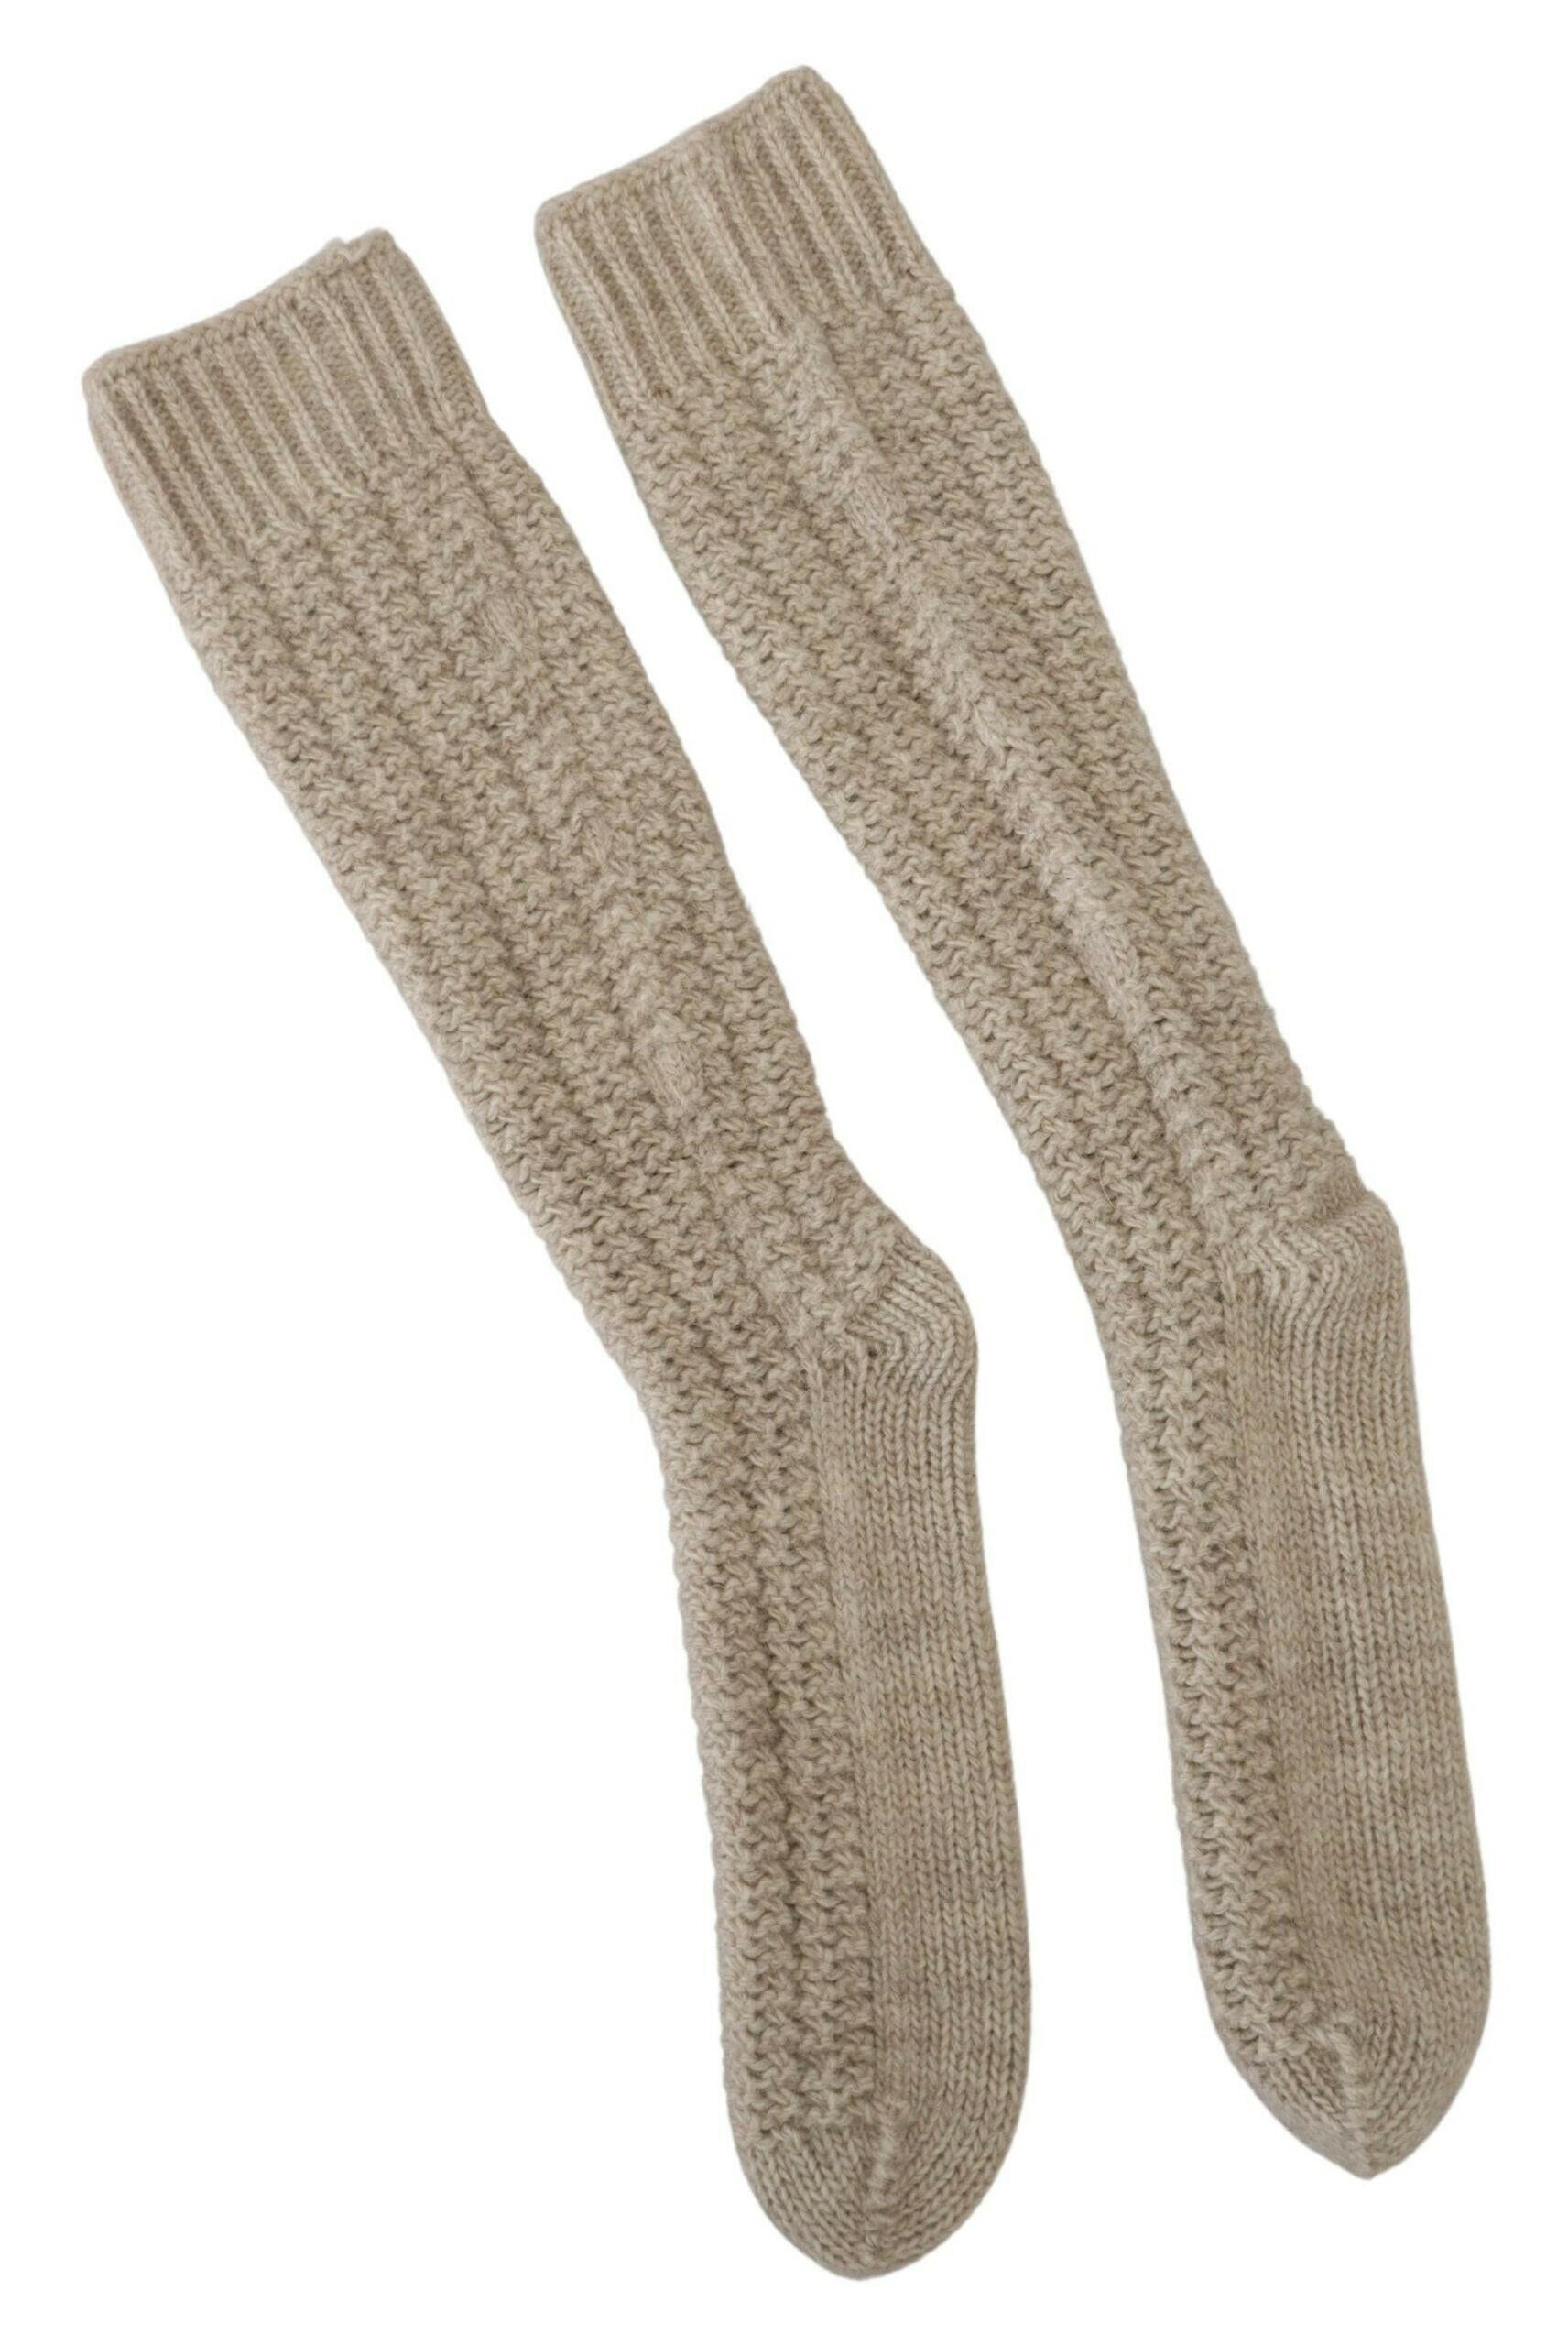 Dolce & Gabbana Beige Wool Knit Calf Long Women Socks - GENUINE AUTHENTIC BRAND LLC  